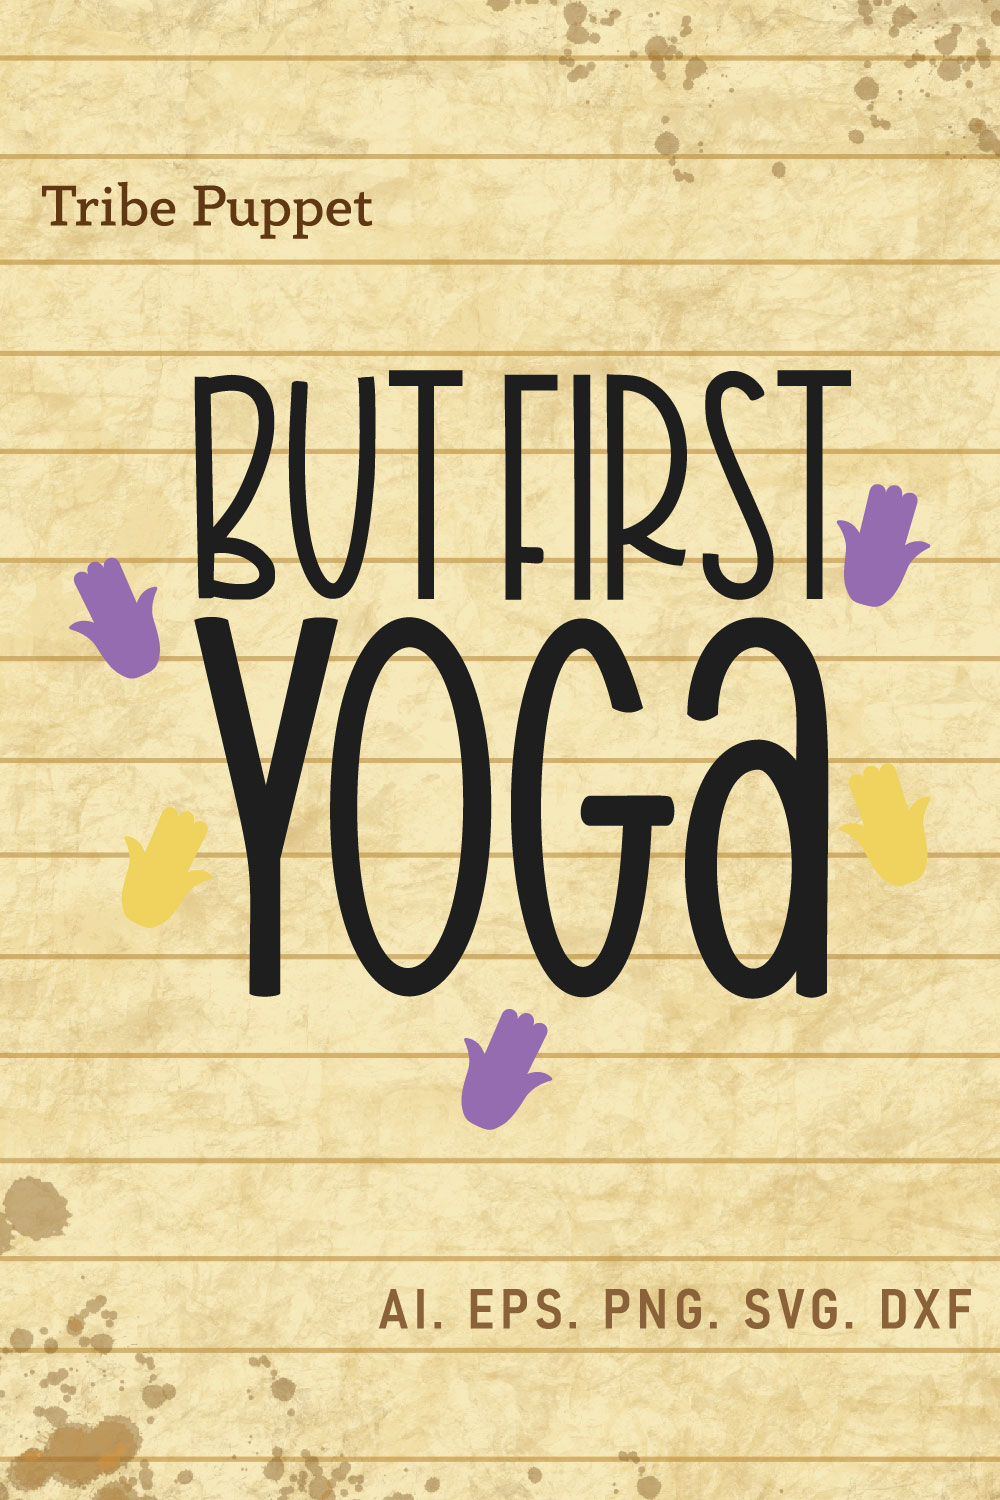 Yoga SVG pinterest preview image.